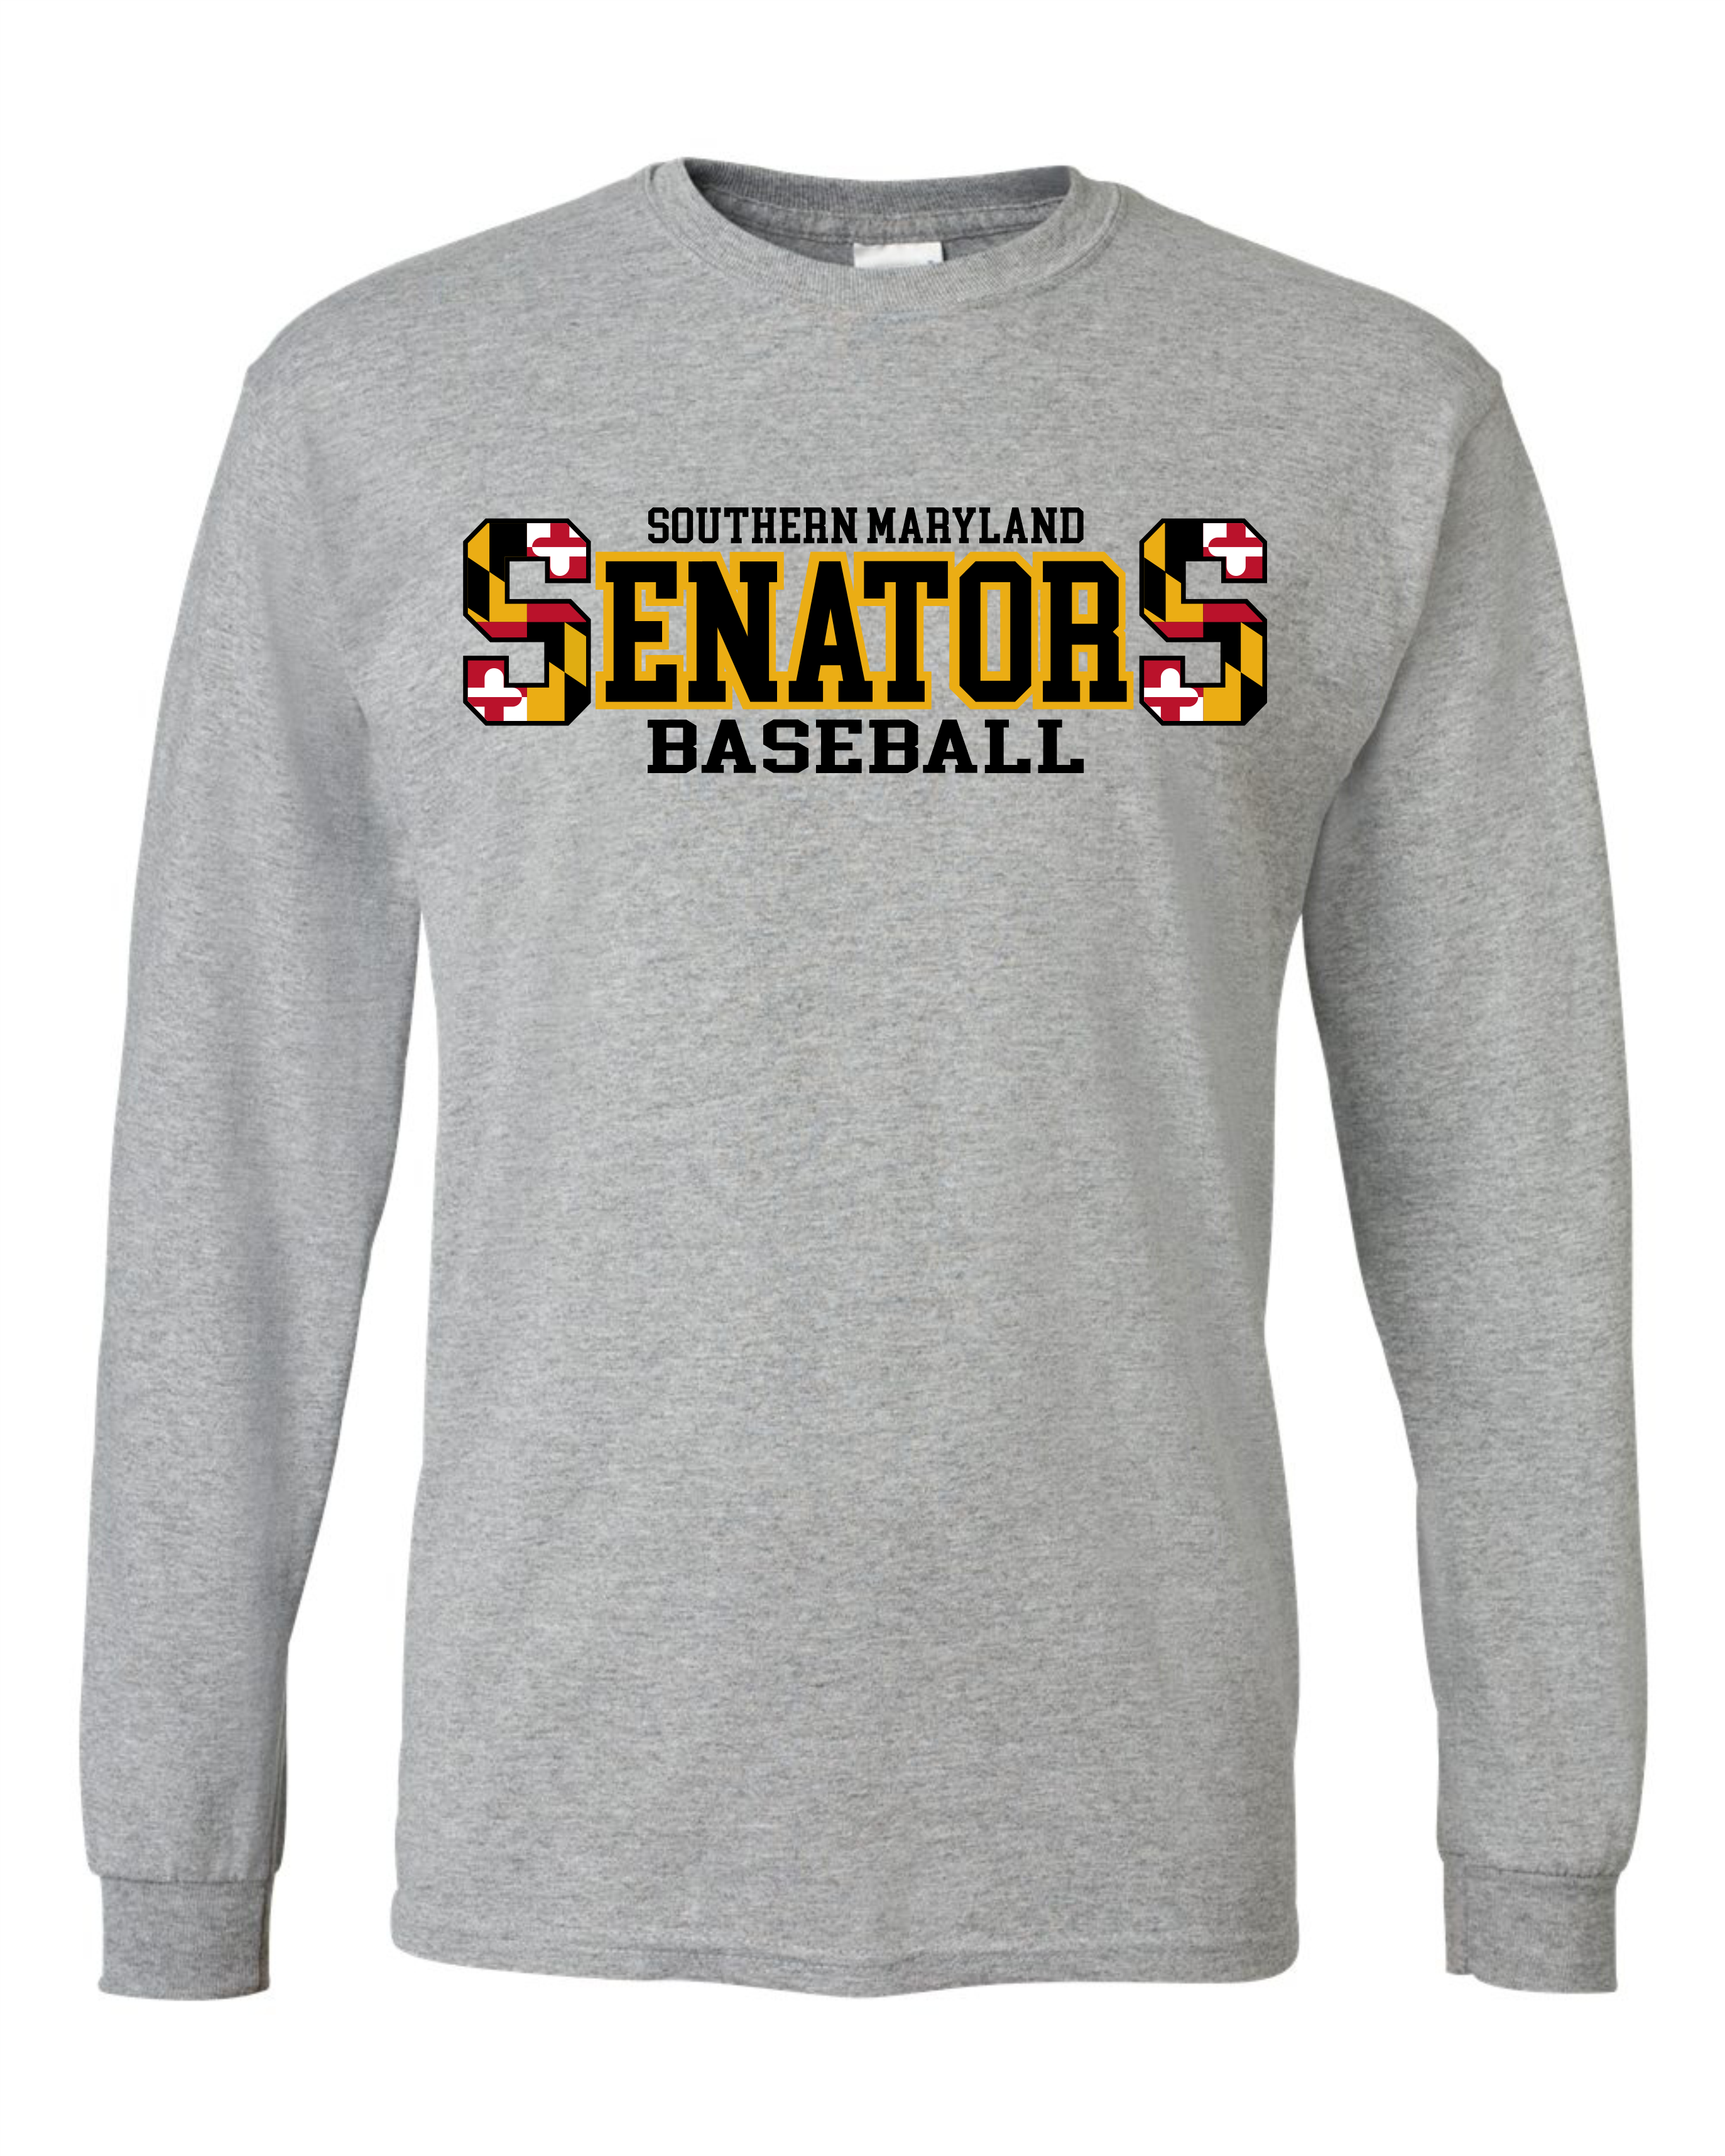 Senators Long Sleeve T-shirt Double S Design